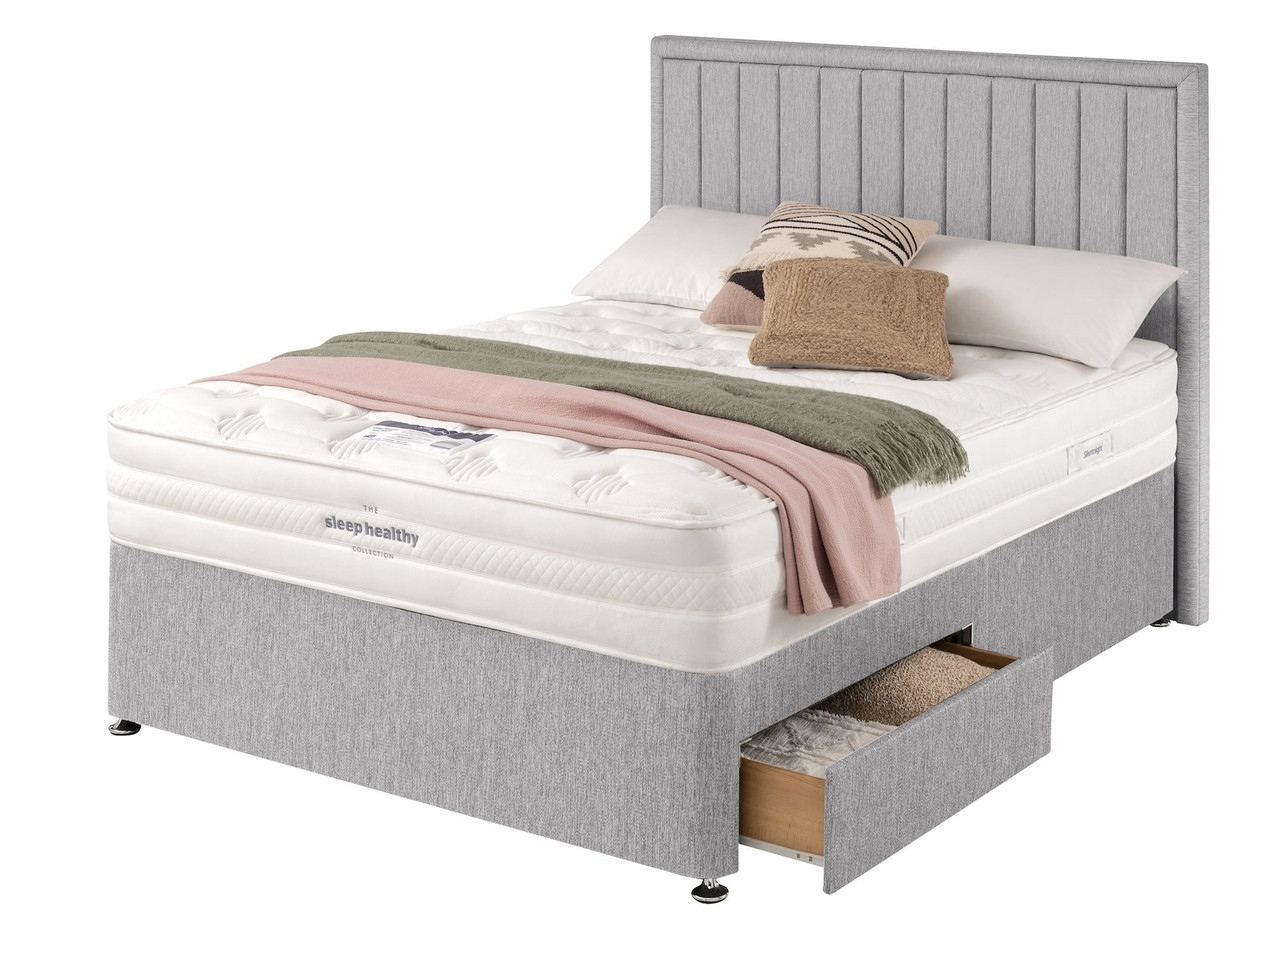 Silentnight Sleep Healthy Eco 2000 Divan Bed Set Double Dolphin Grey